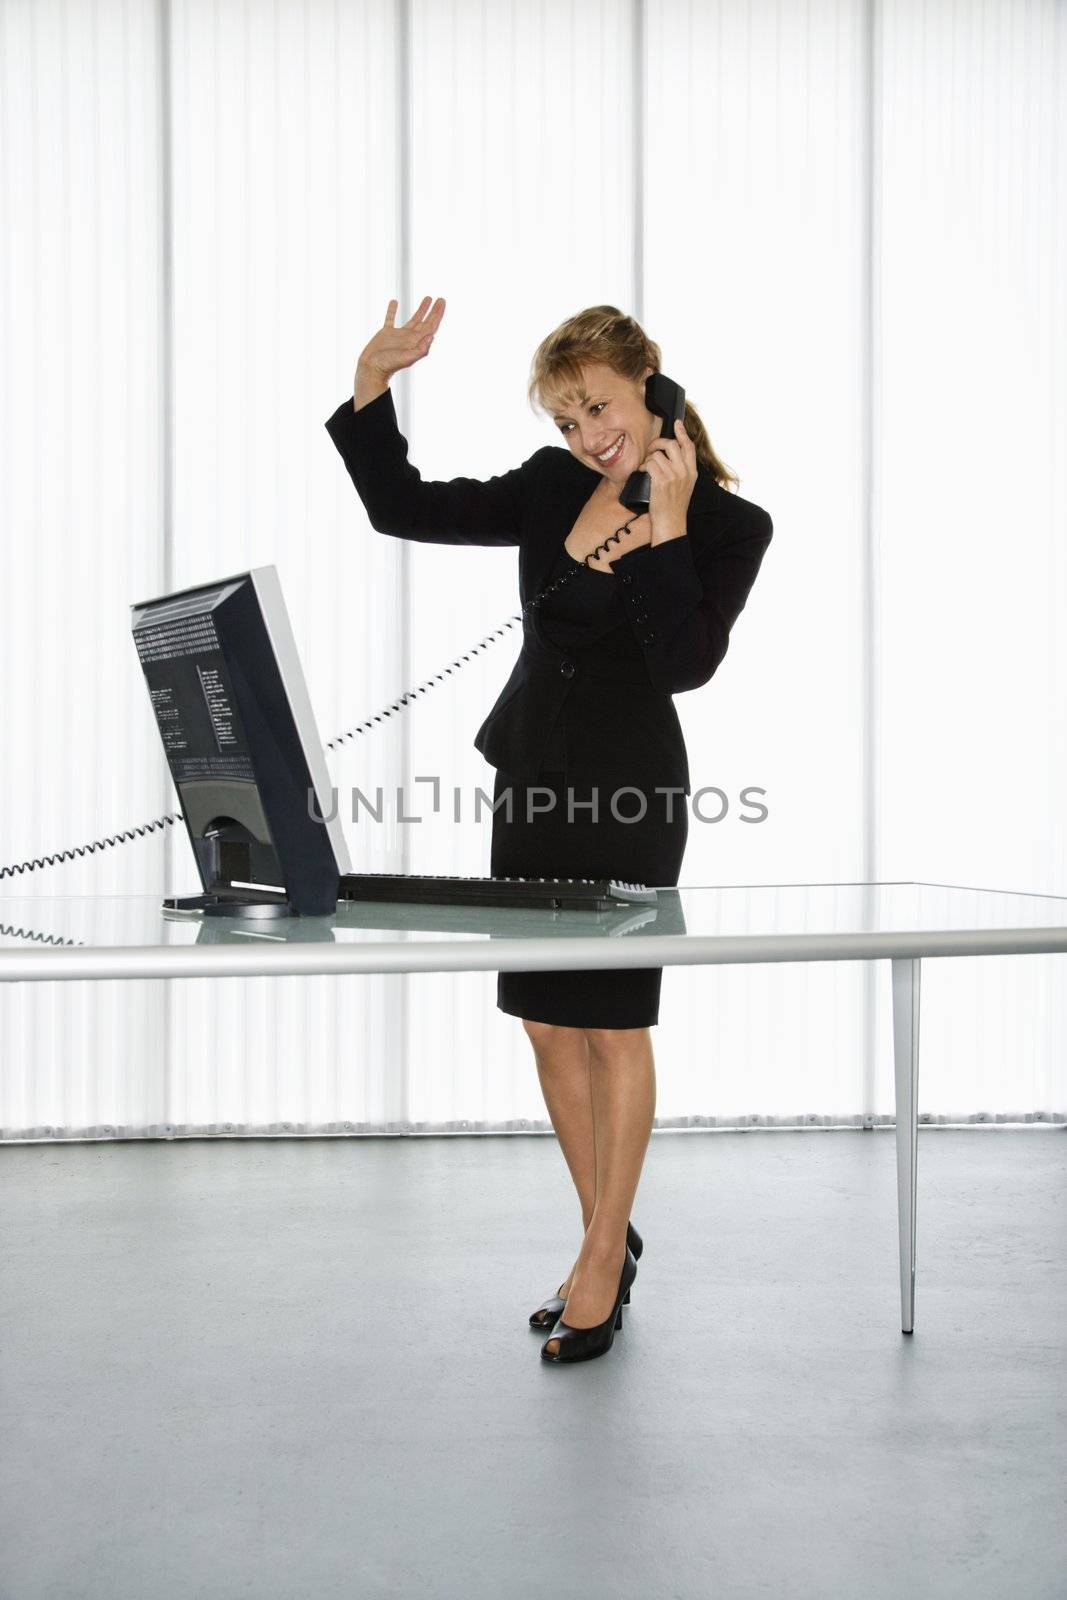 Caucasian businesswoman standing at computer desk waving on telephone.